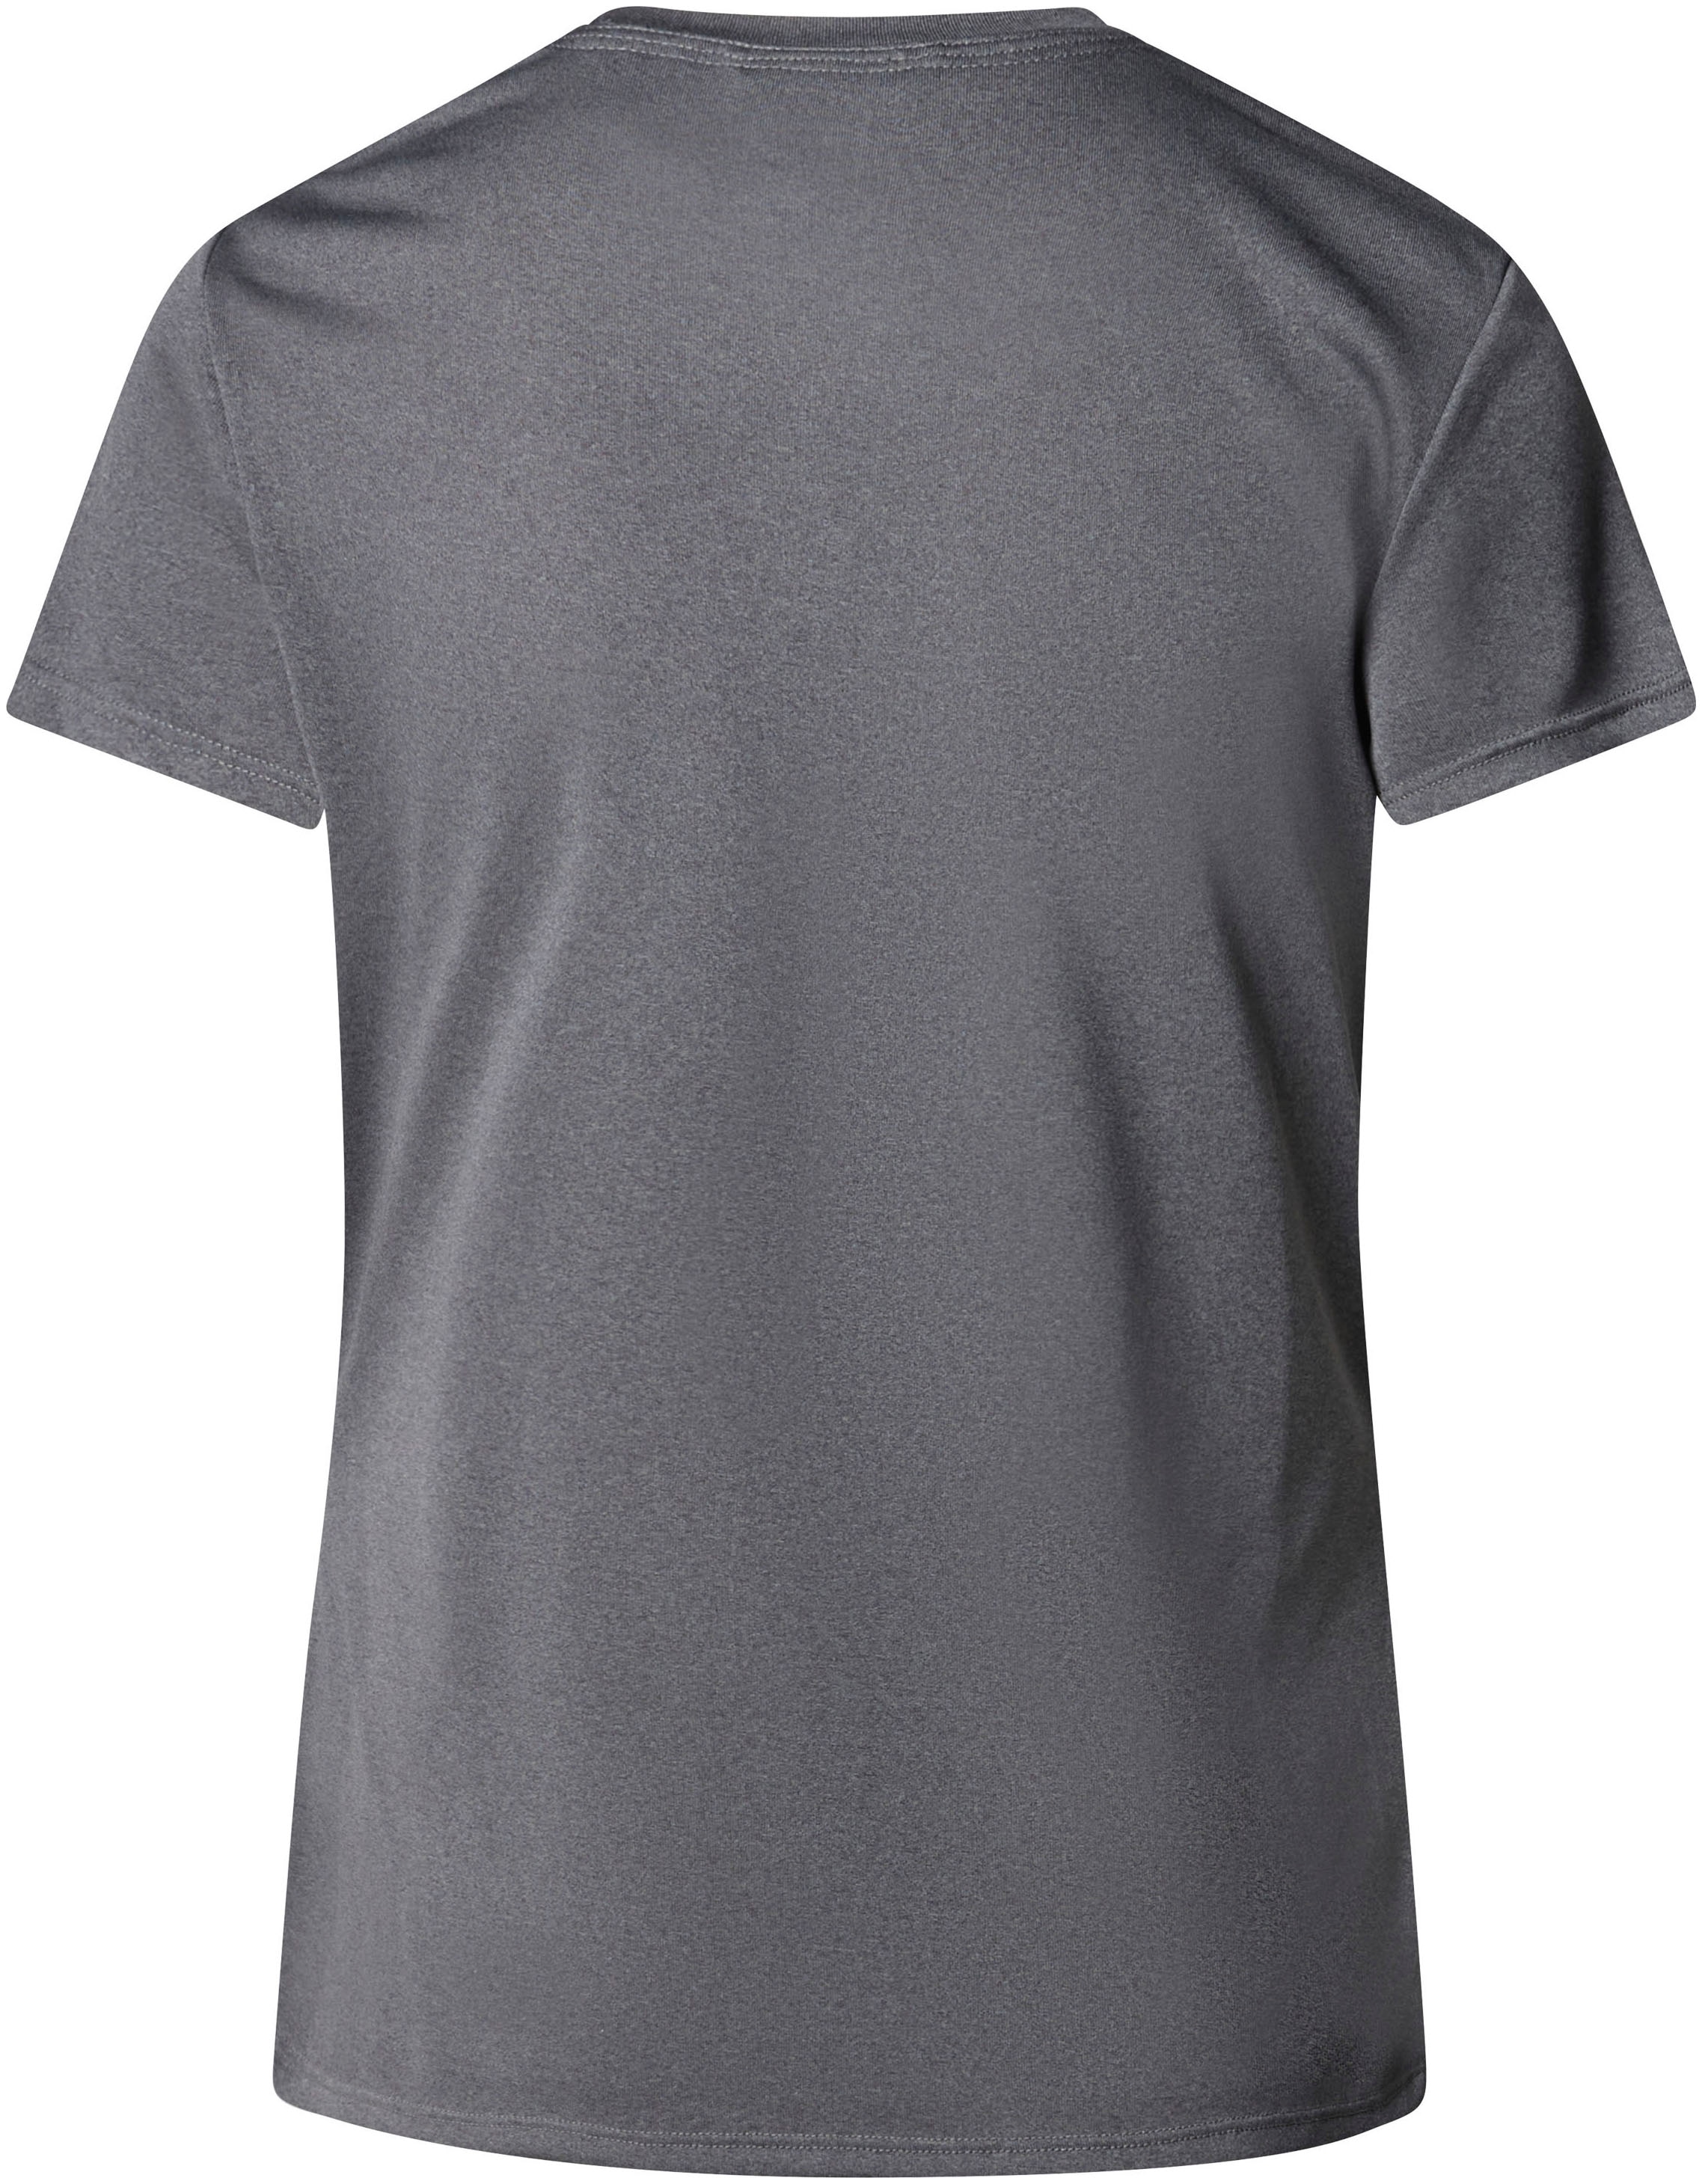 The North Face T-Shirt »W REAXION AMP CREW - EU«